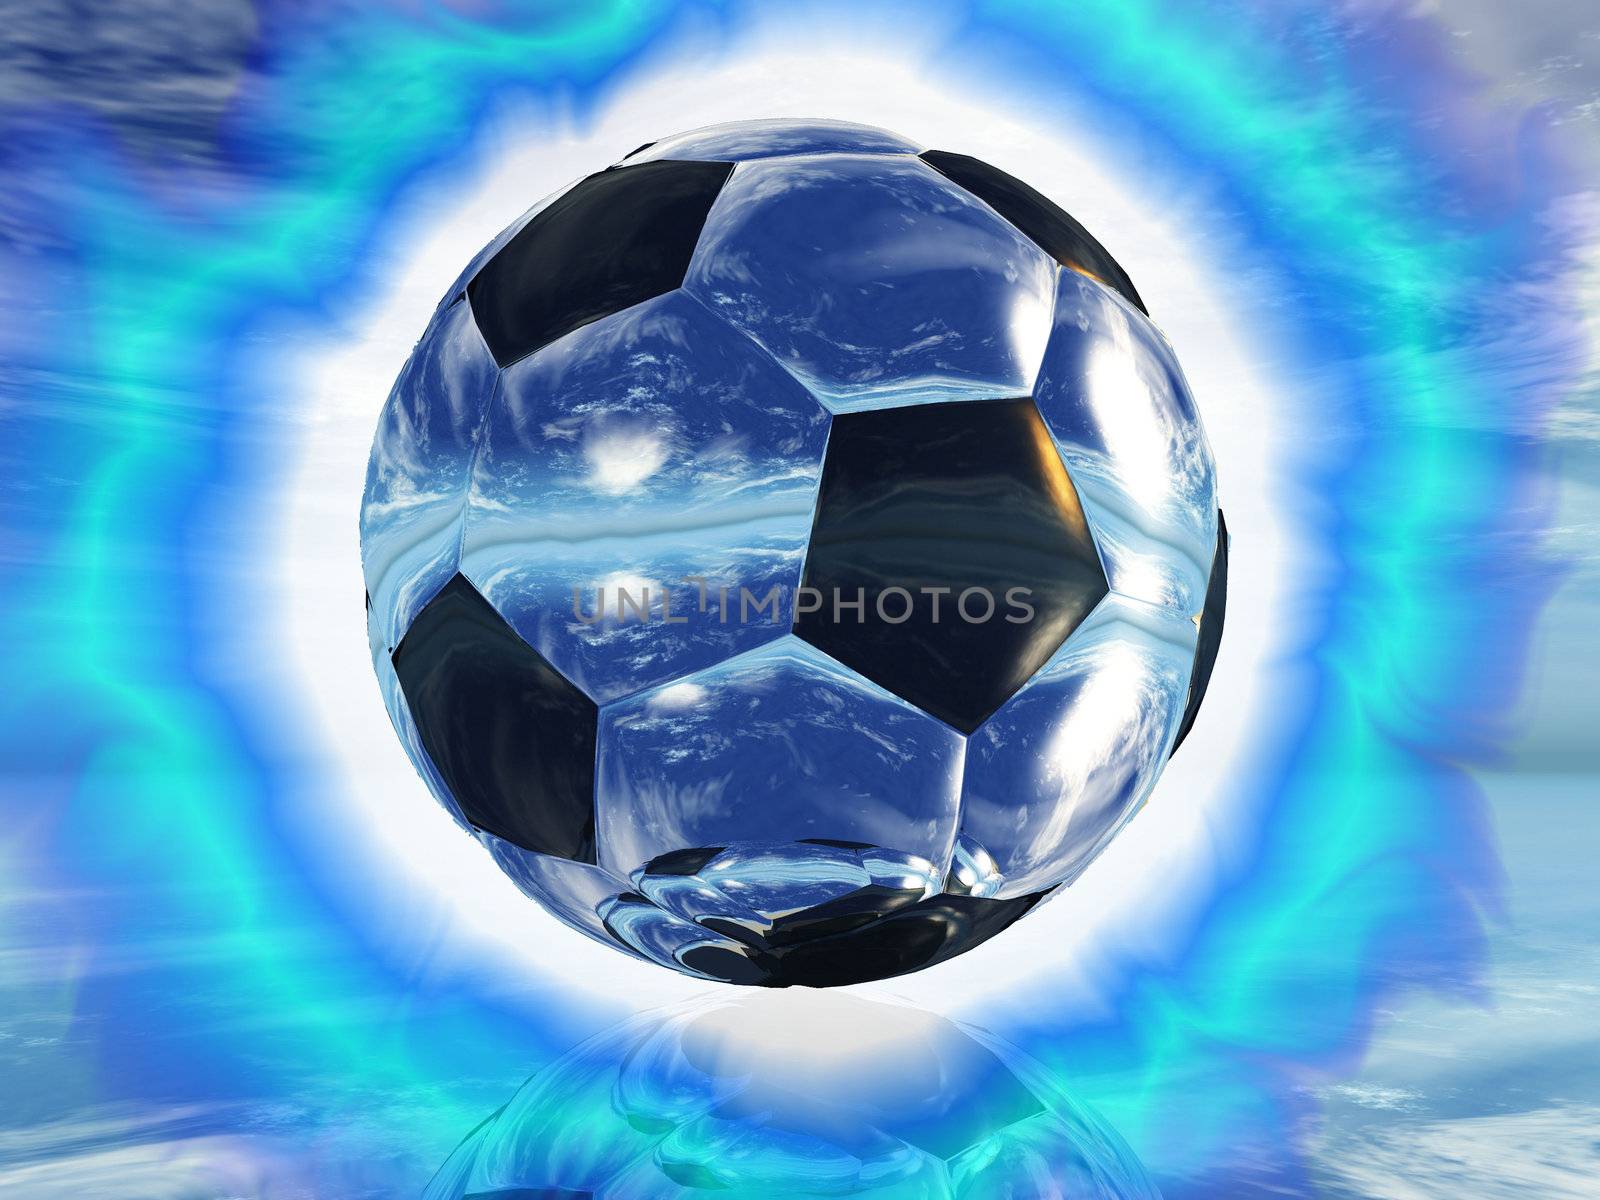 soccer ball and lights by njaj